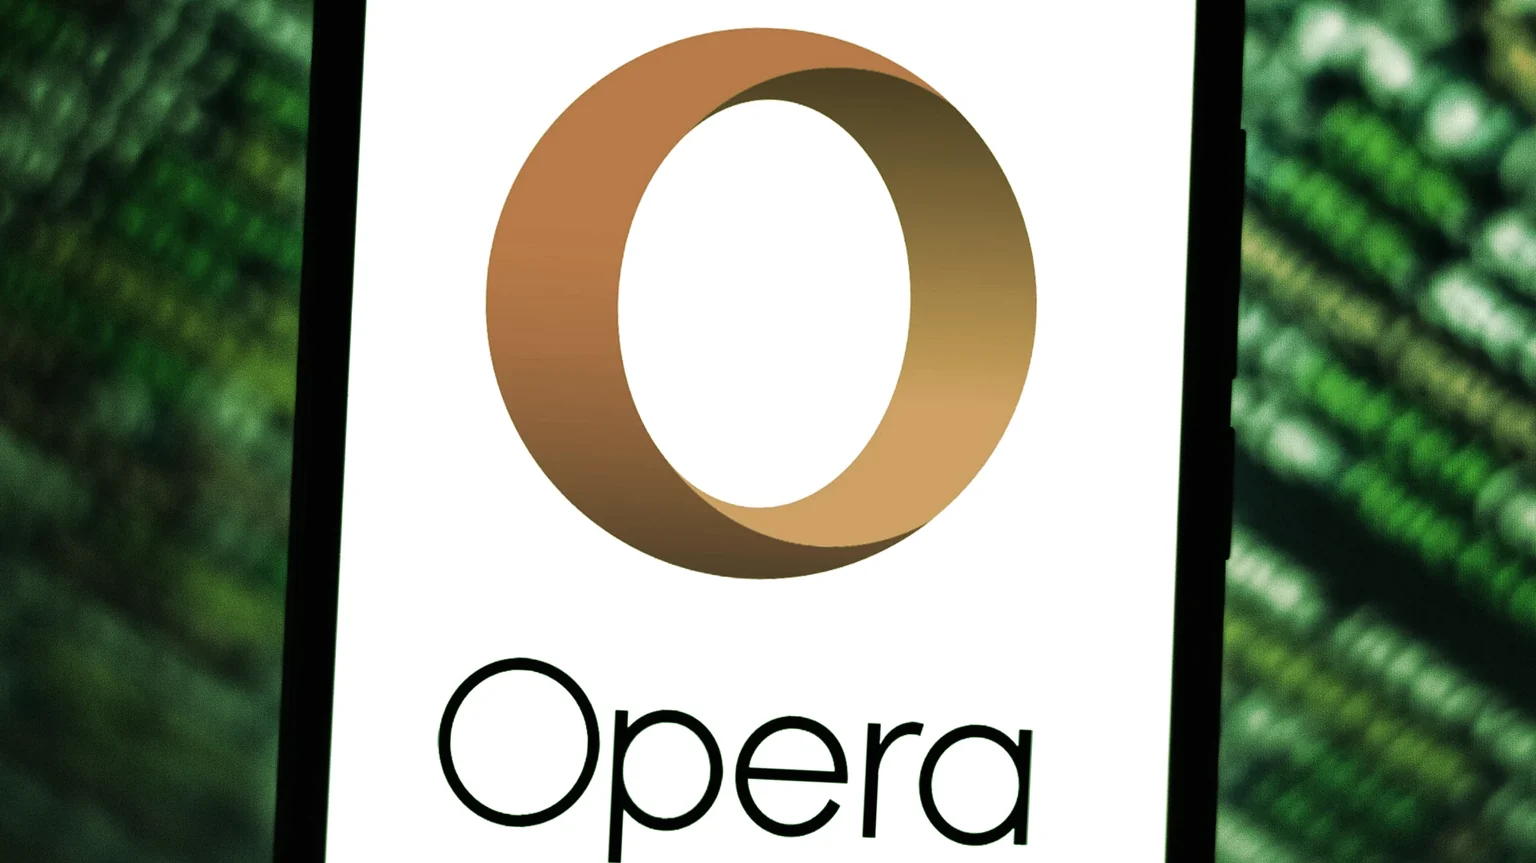 Opera browser. Image: Shutterstock